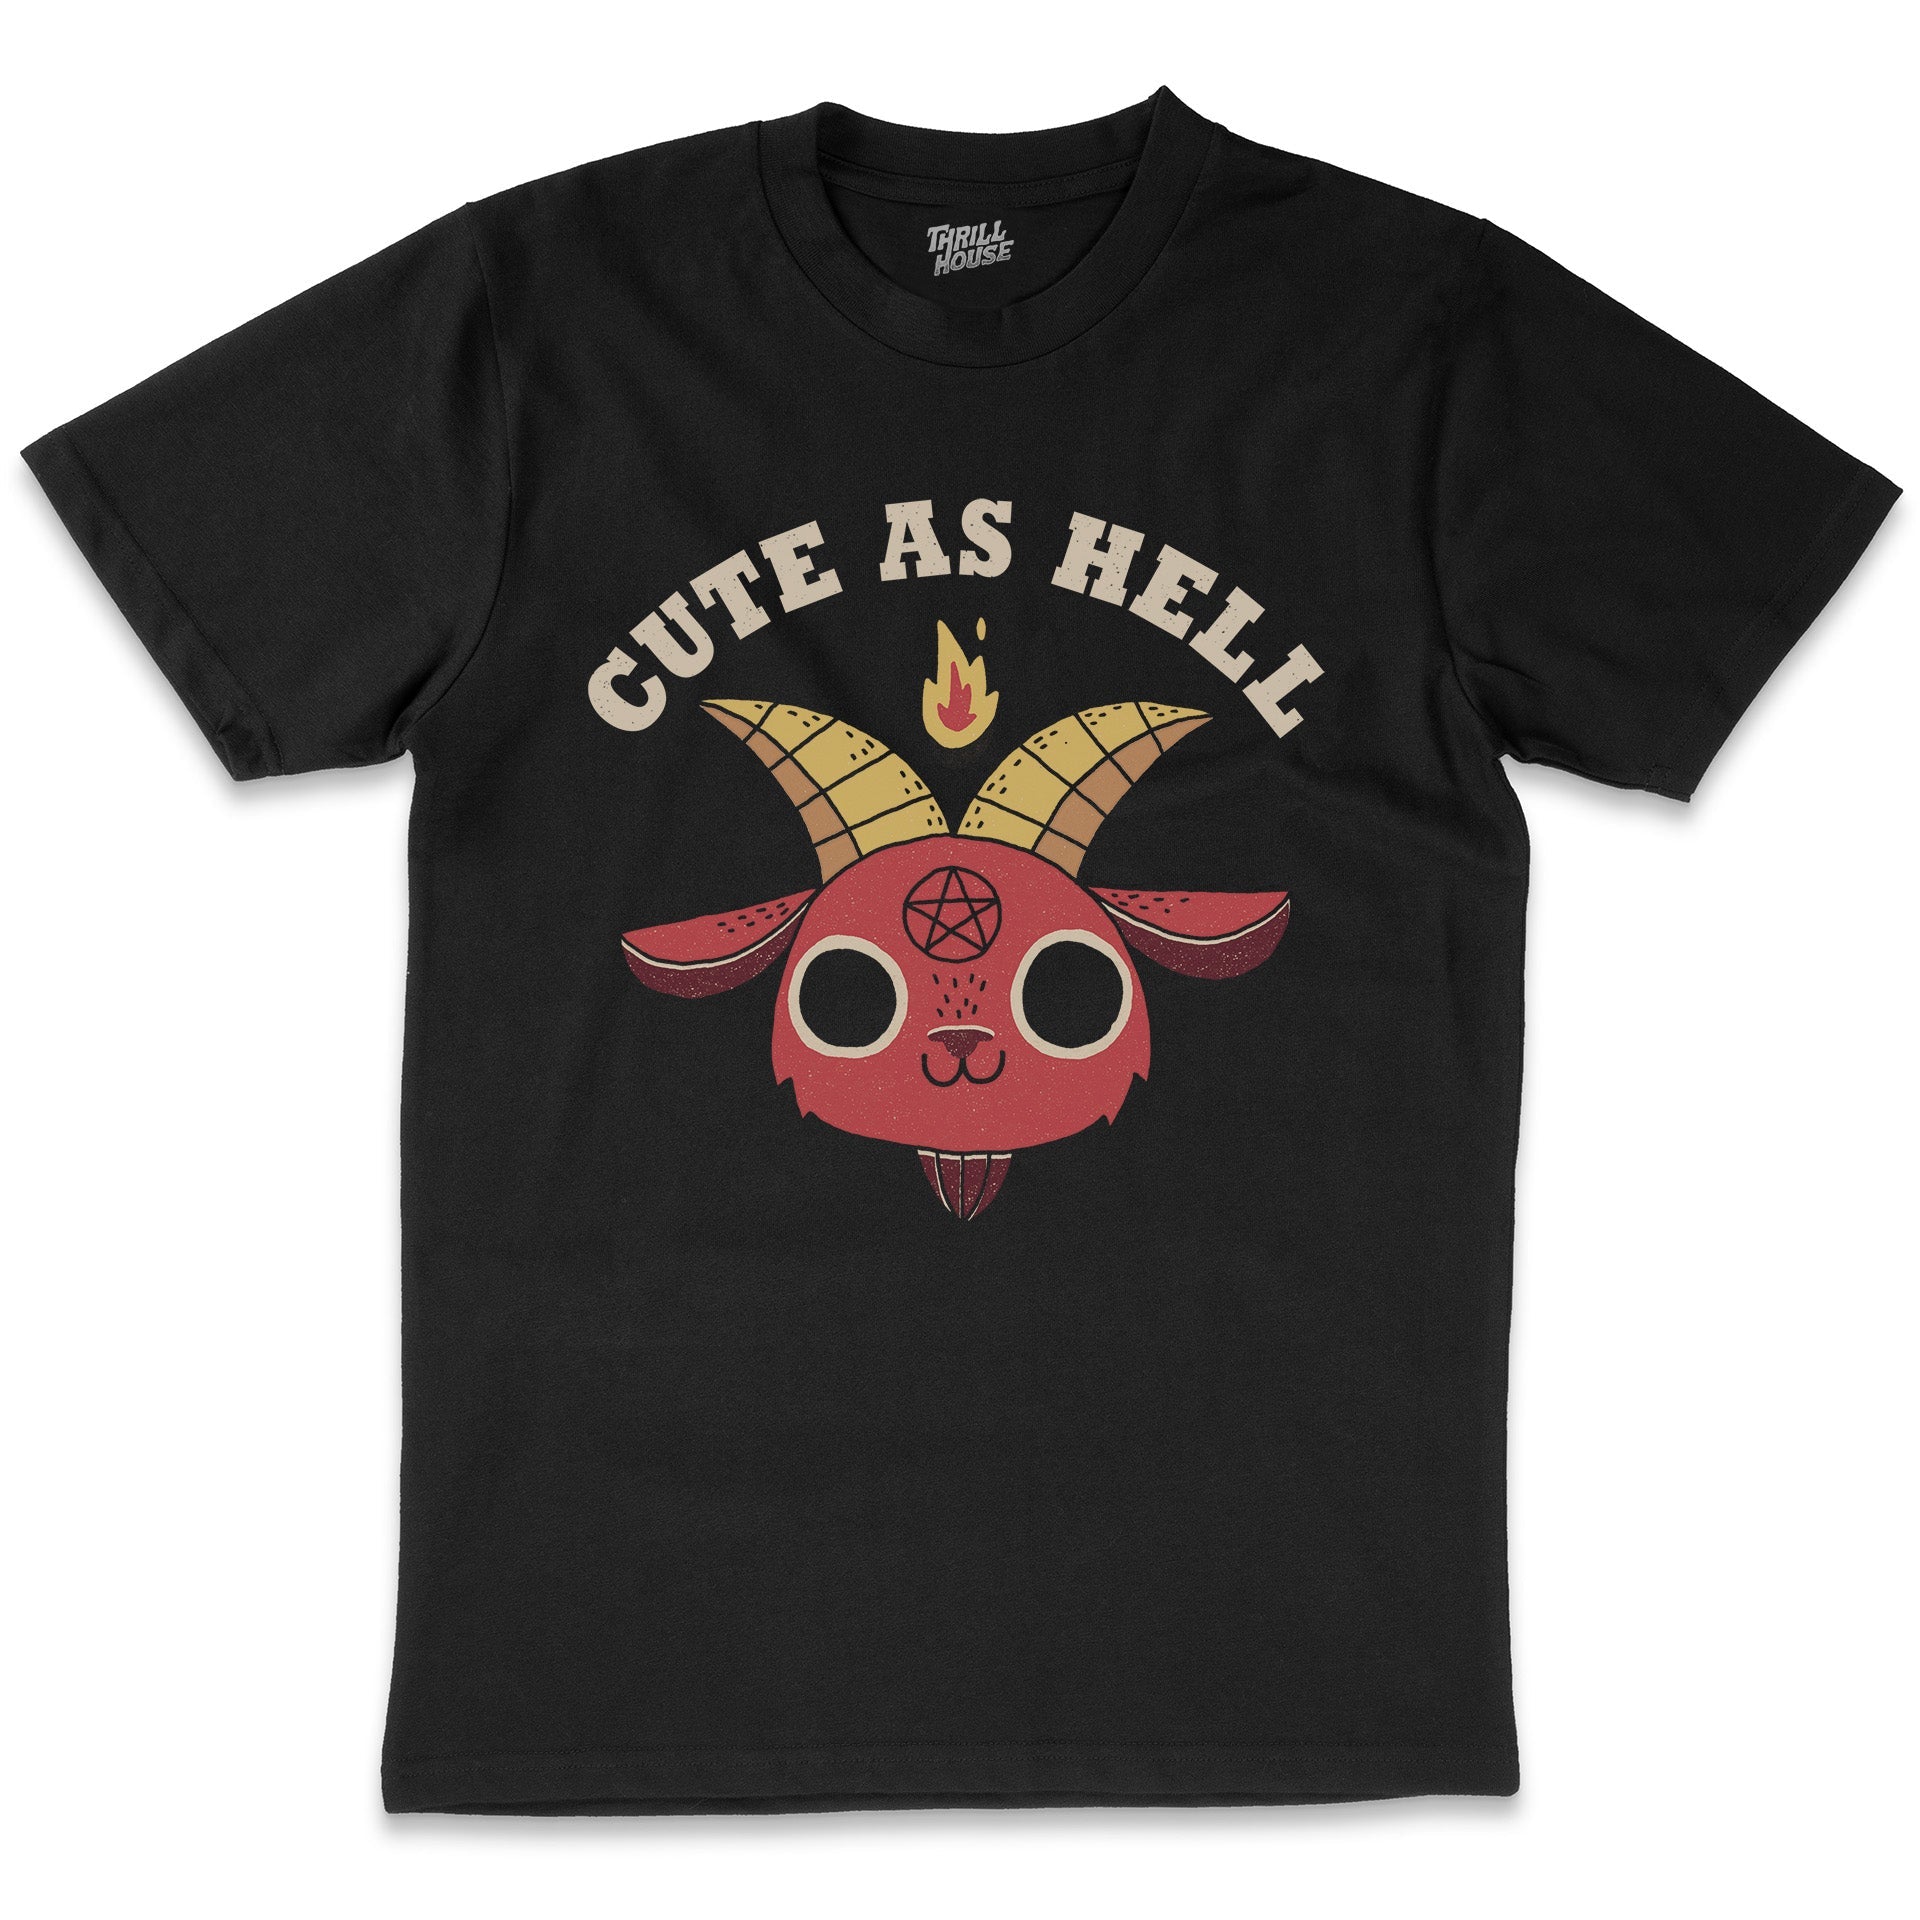 Cute As Hell Funny Dark Humour Slogan Demon Devil Occult Parody Cotton T-Shirt